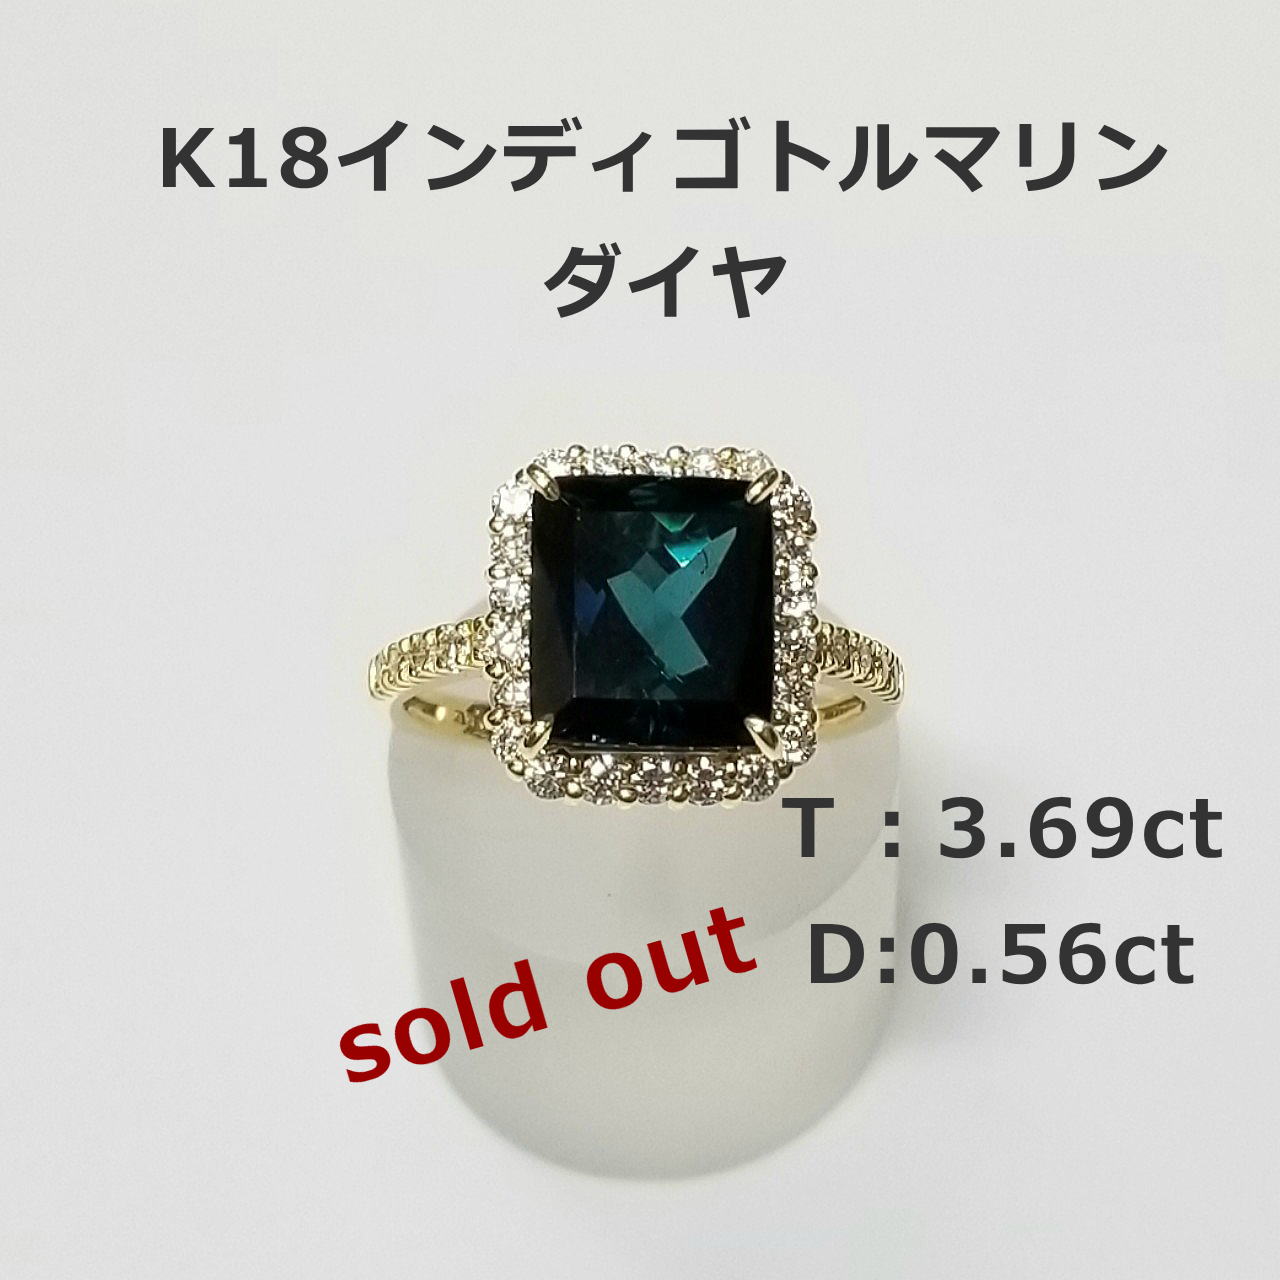 K18WGスフェーン/ダイヤネックレス　178,000円期間限定セール特価税込。